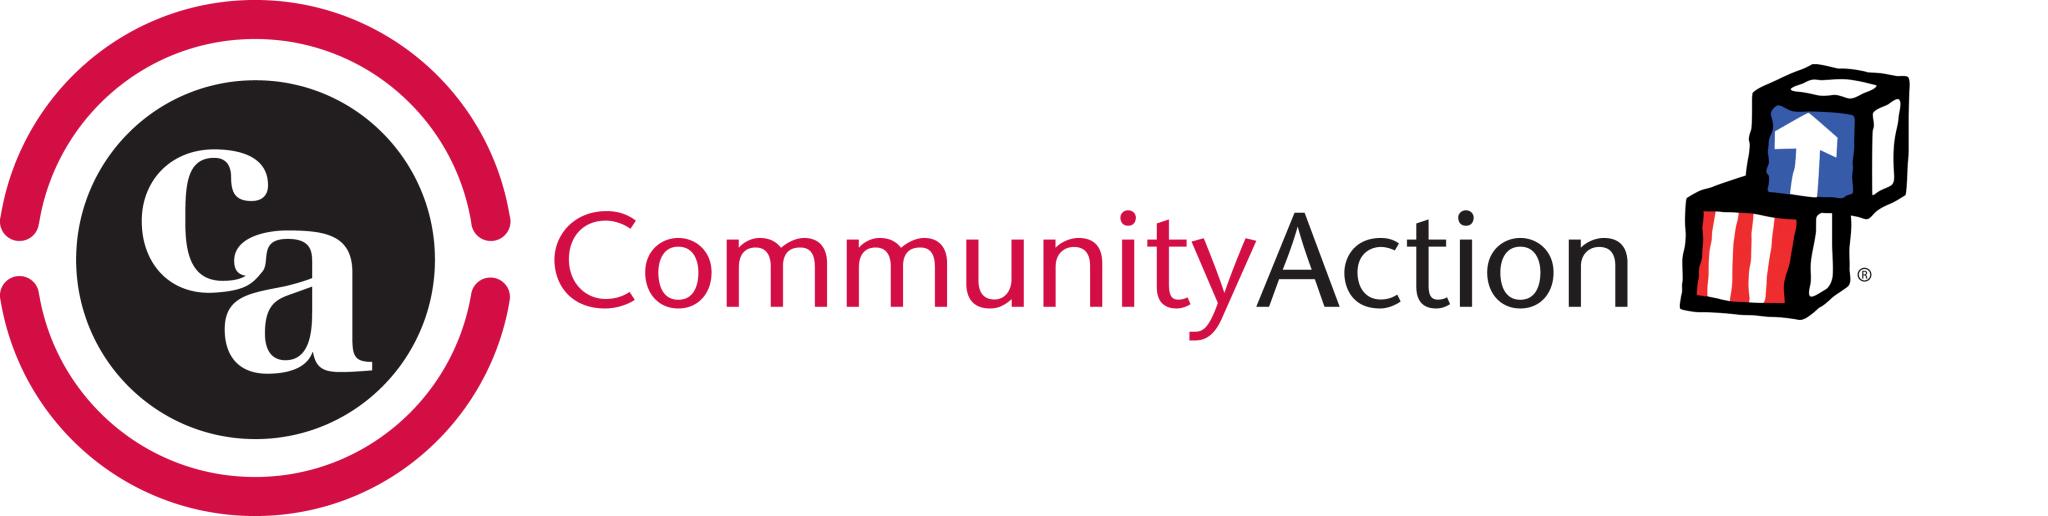 Community Action - Head Start Logo